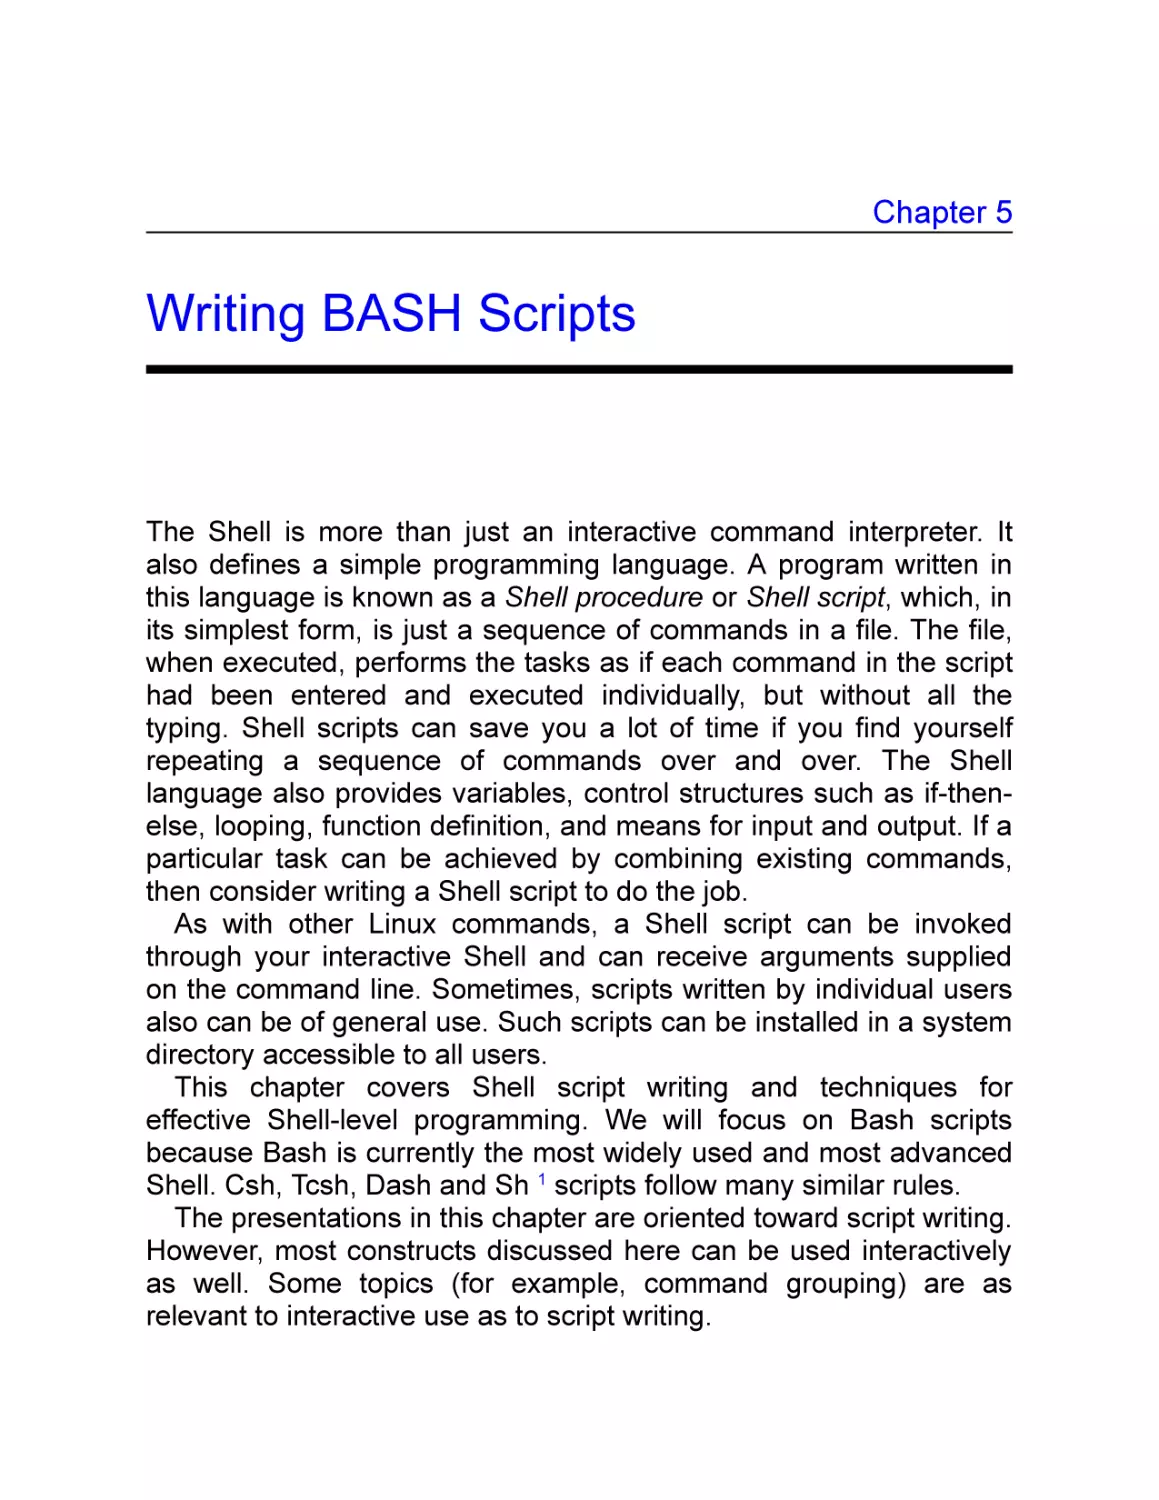 5 Writing BASH Scripts